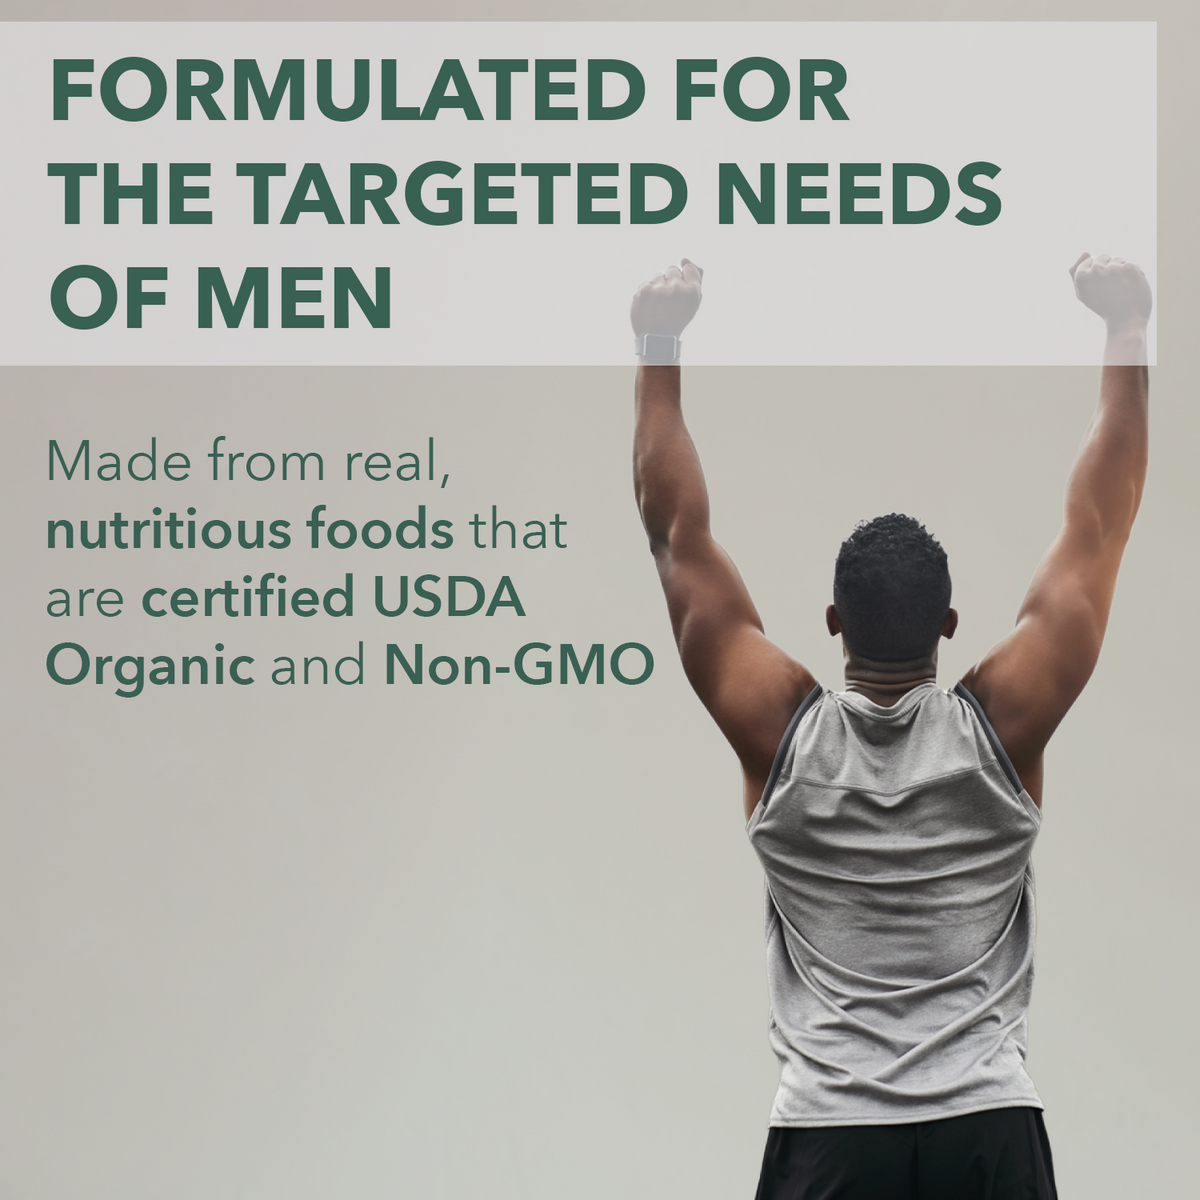 Organic Multivitamin for Men – Whole Food Blend